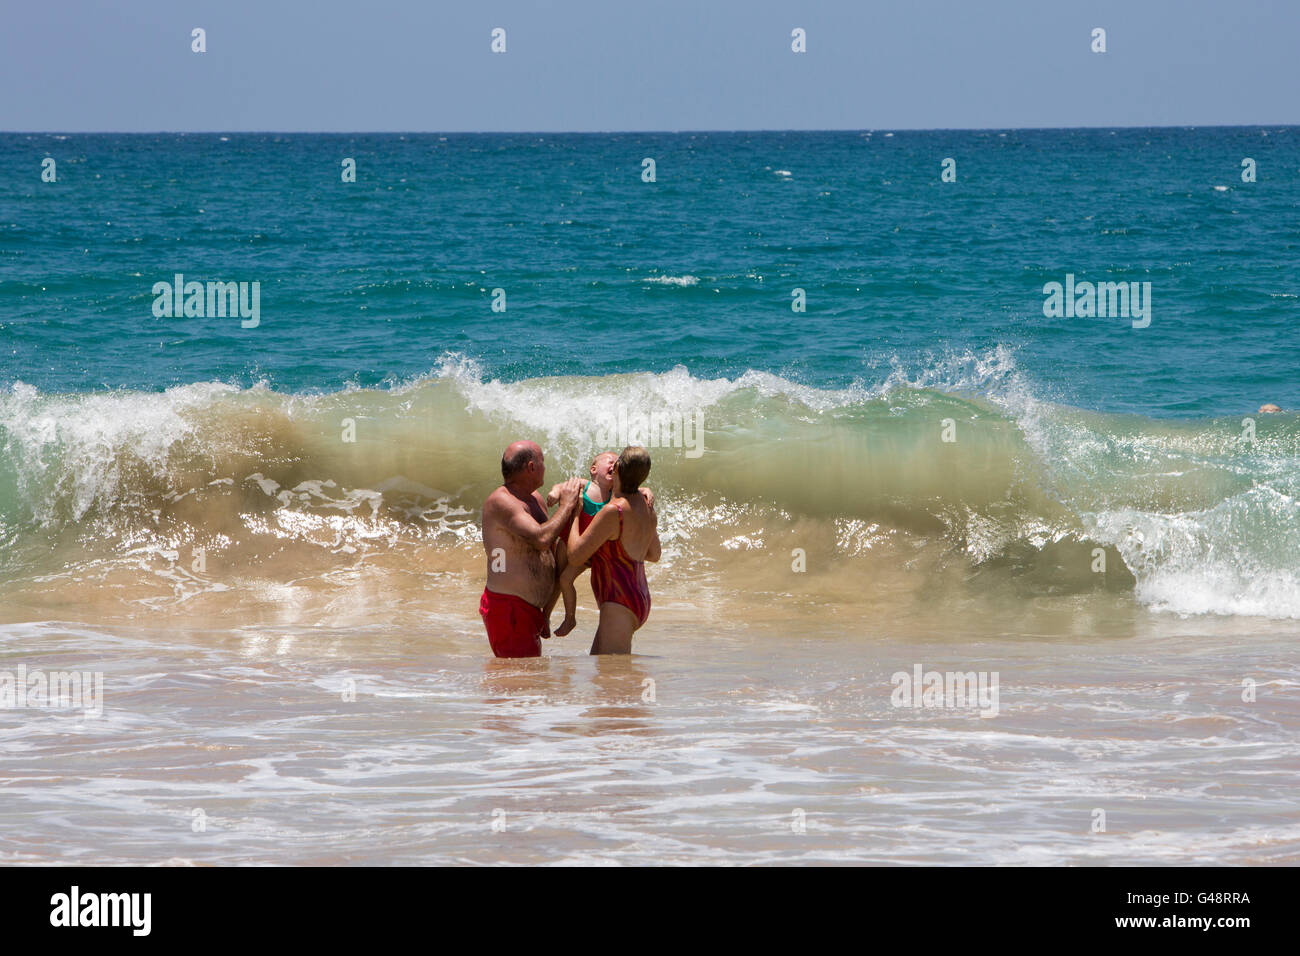 Sri Lanka, Mirissa beach, tourist couple endangering distressed young child in powerful waves Stock Photo